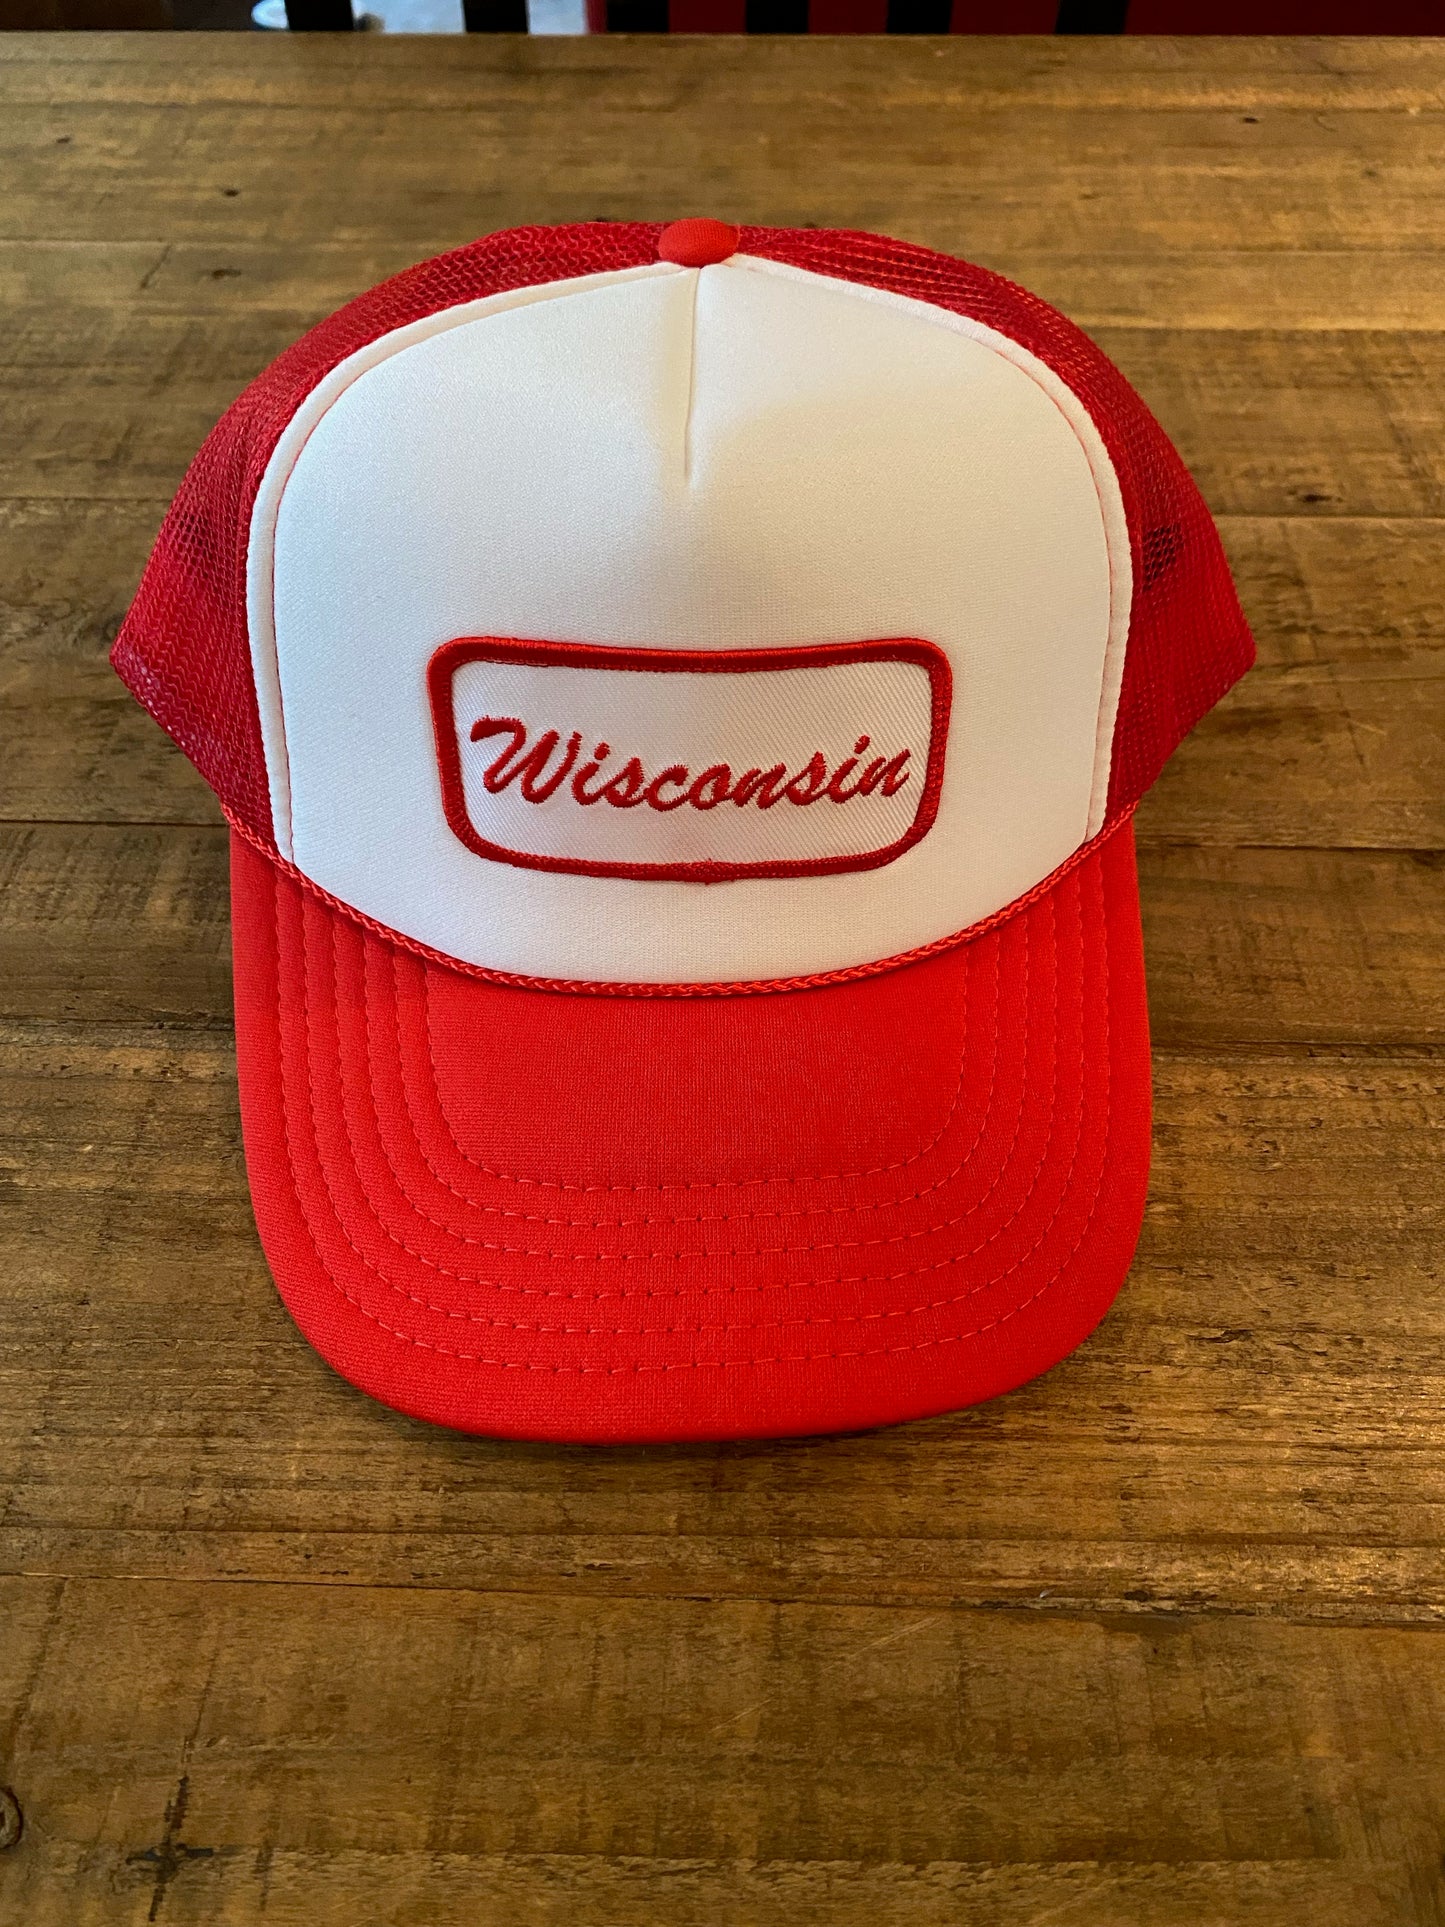 Wisconsin Name Plate Trucker Hat